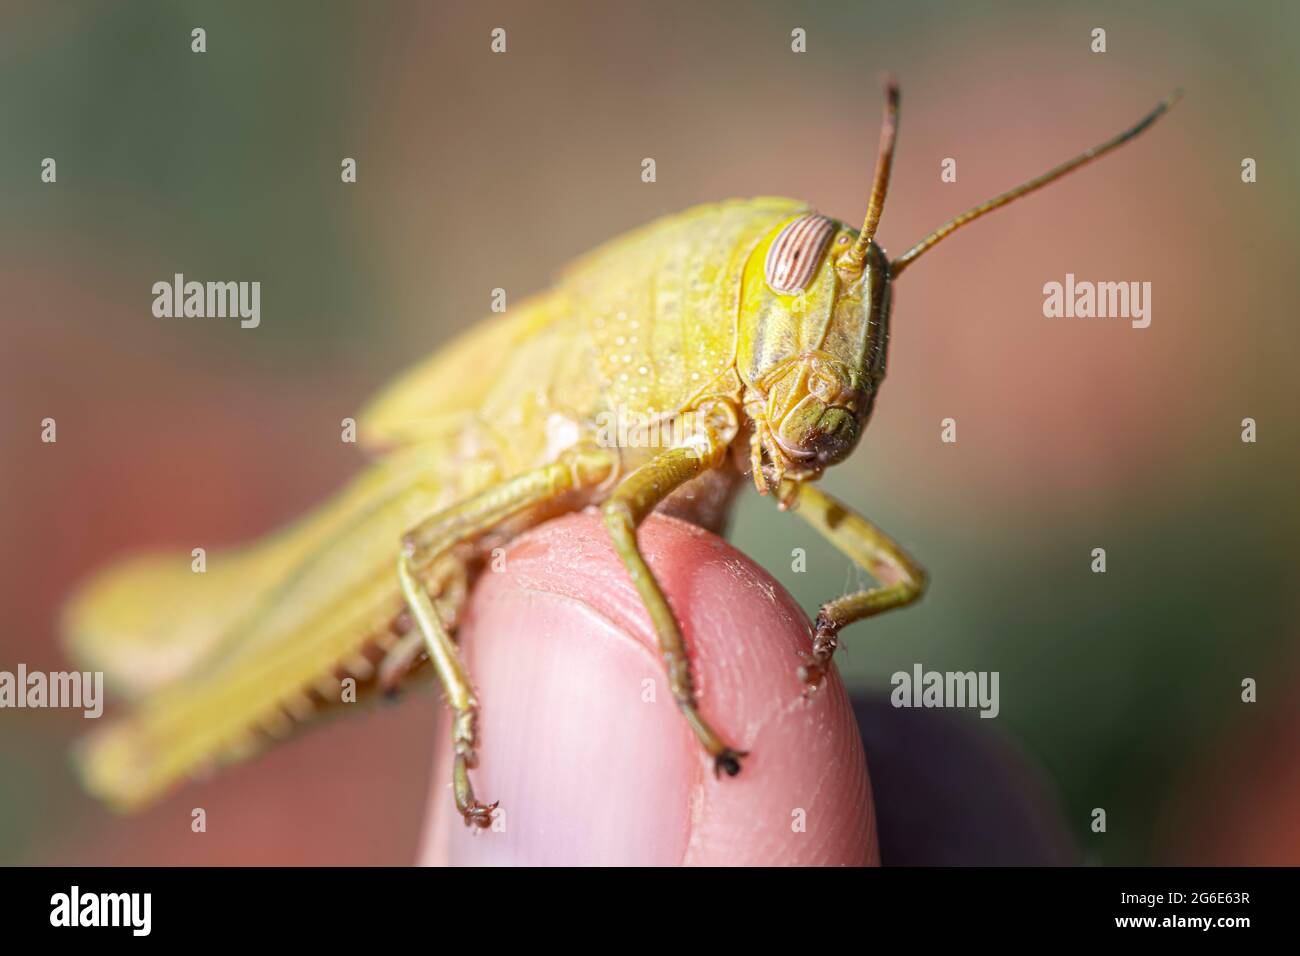 Egyptian locust (Anacridium aegyptium) sitting on a finger, Paros, Aegean Sea, Greece Stock Photo